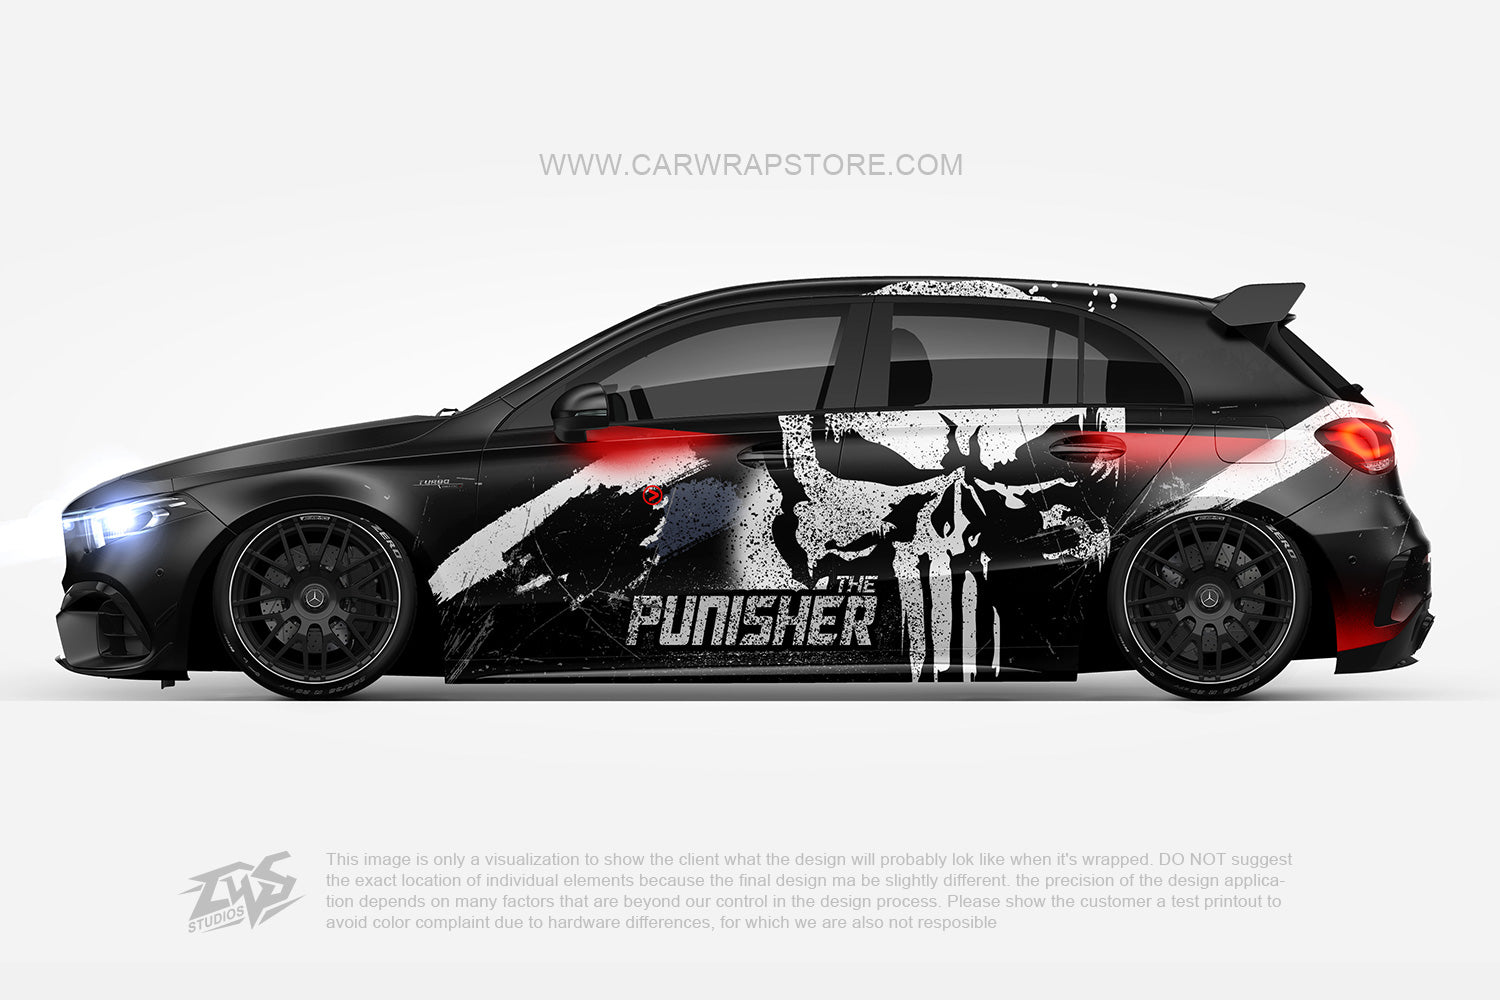 Punisher【PN-01】 - Car Wrap Store